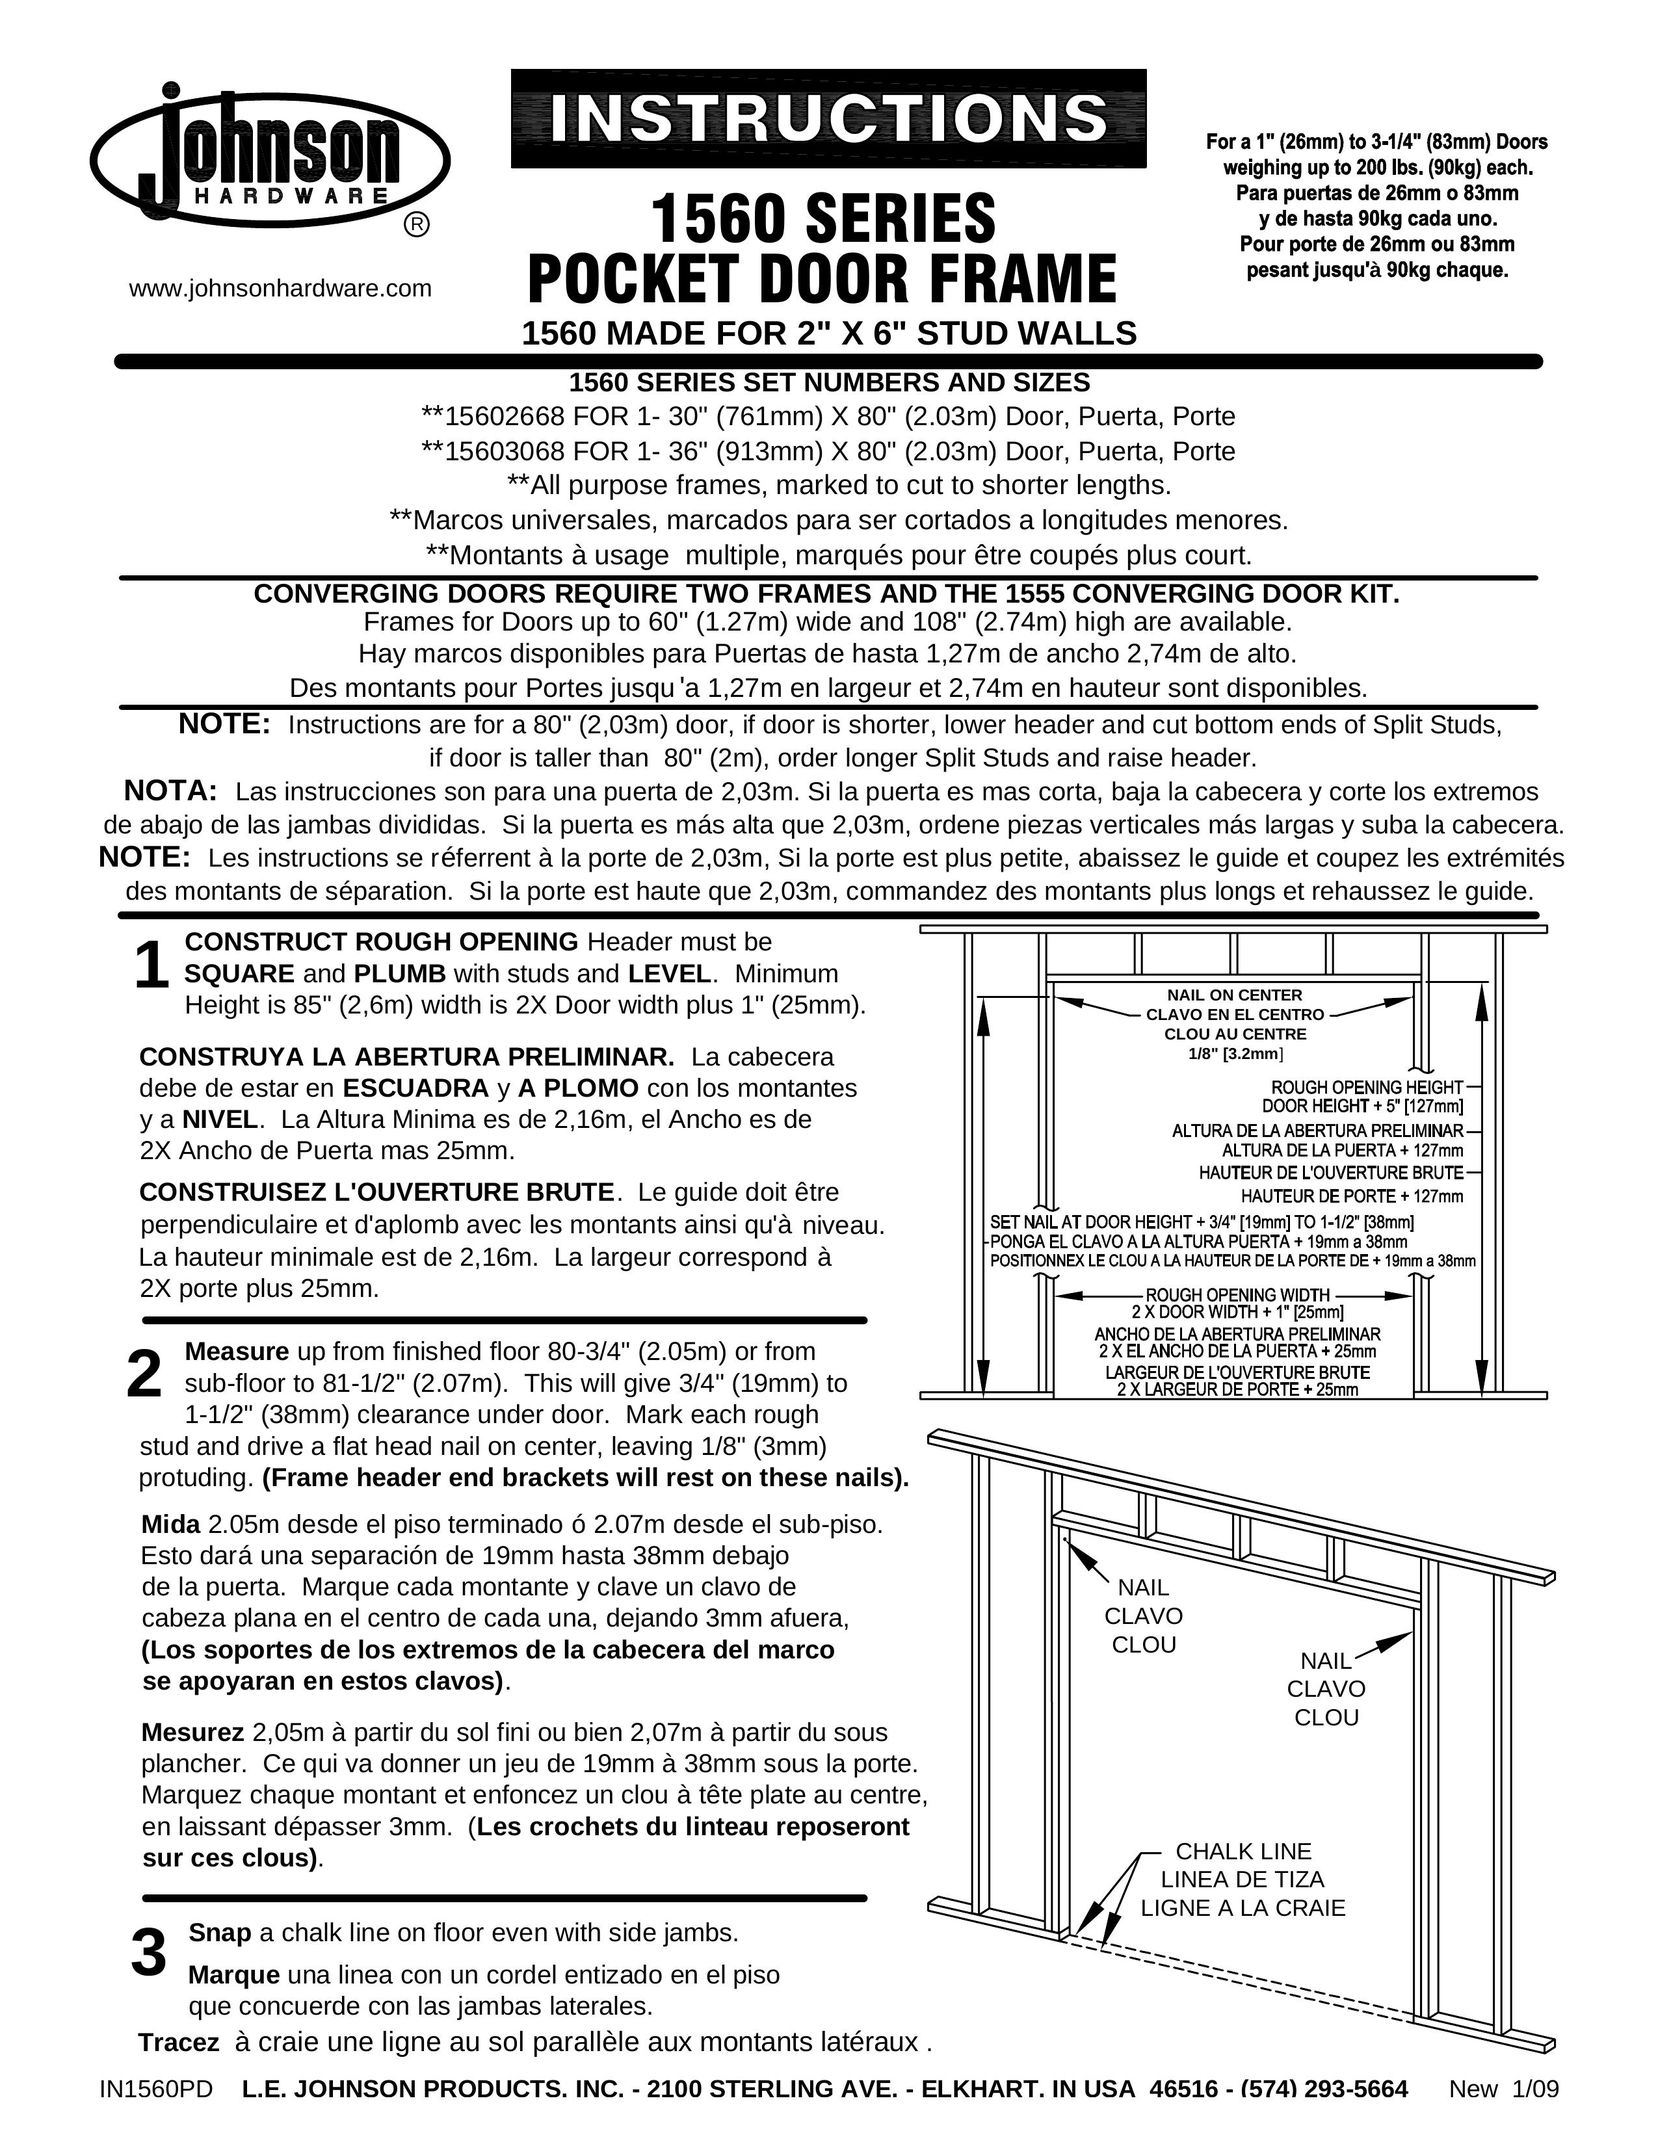 Johnson Hardware 1560 Series Door User Manual